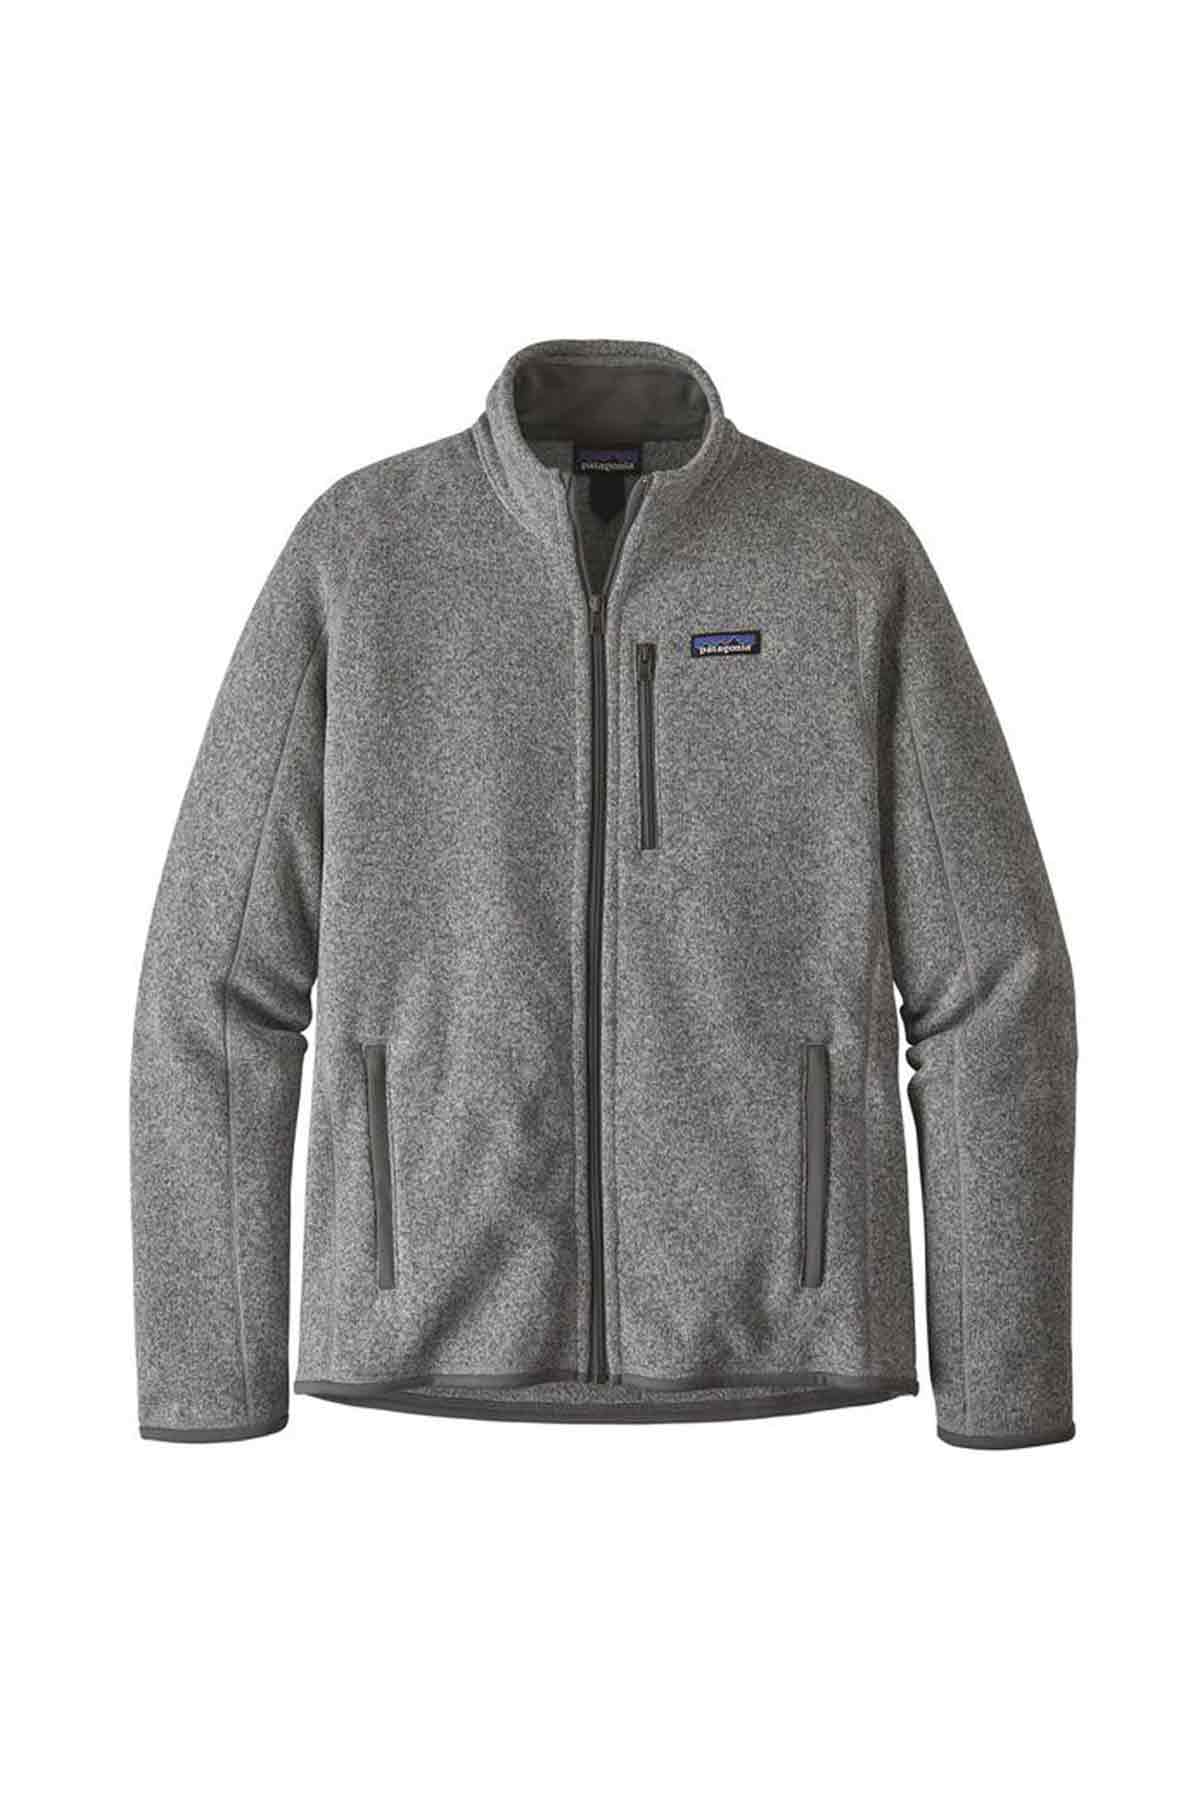 Better Sweater Jacket - Patagonia